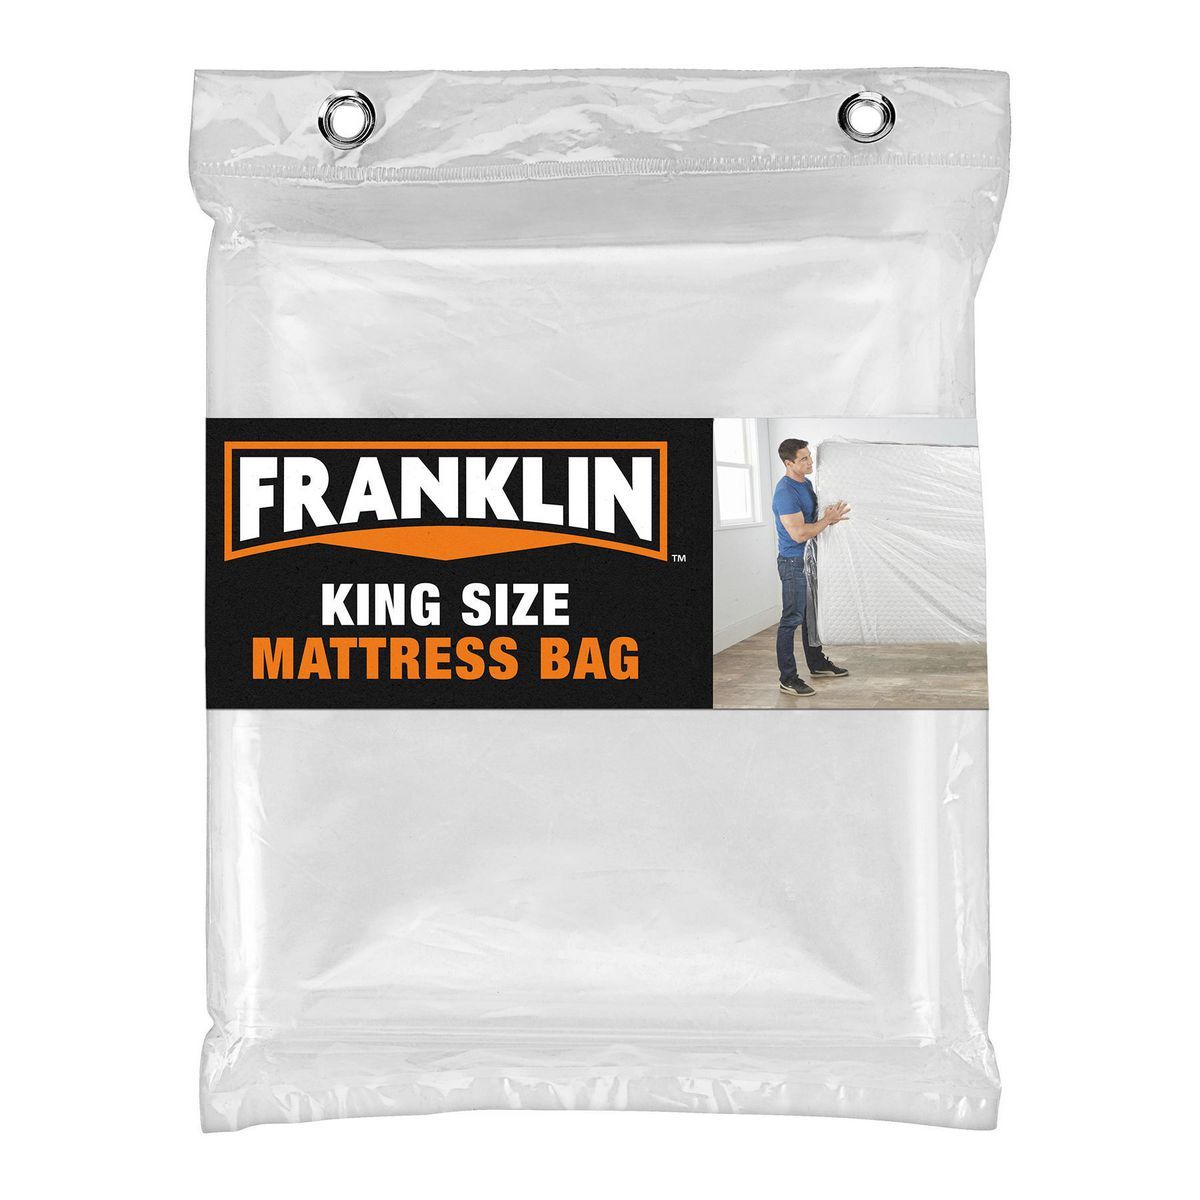 King-size Mattress Bag